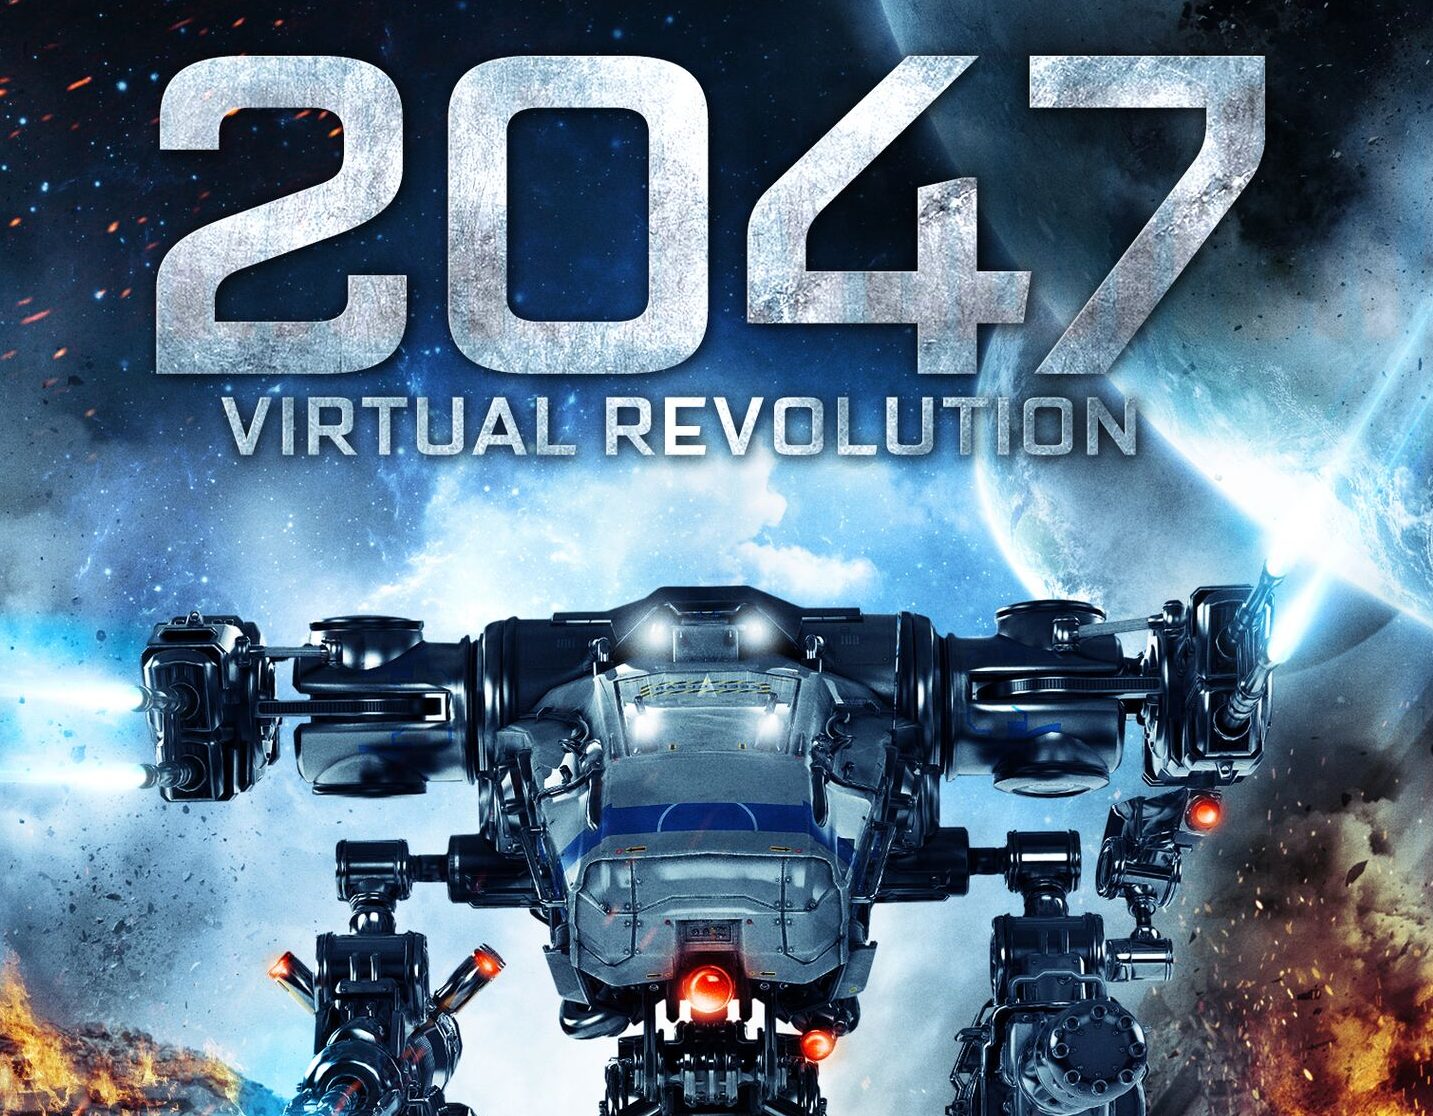 Virtual Revolution